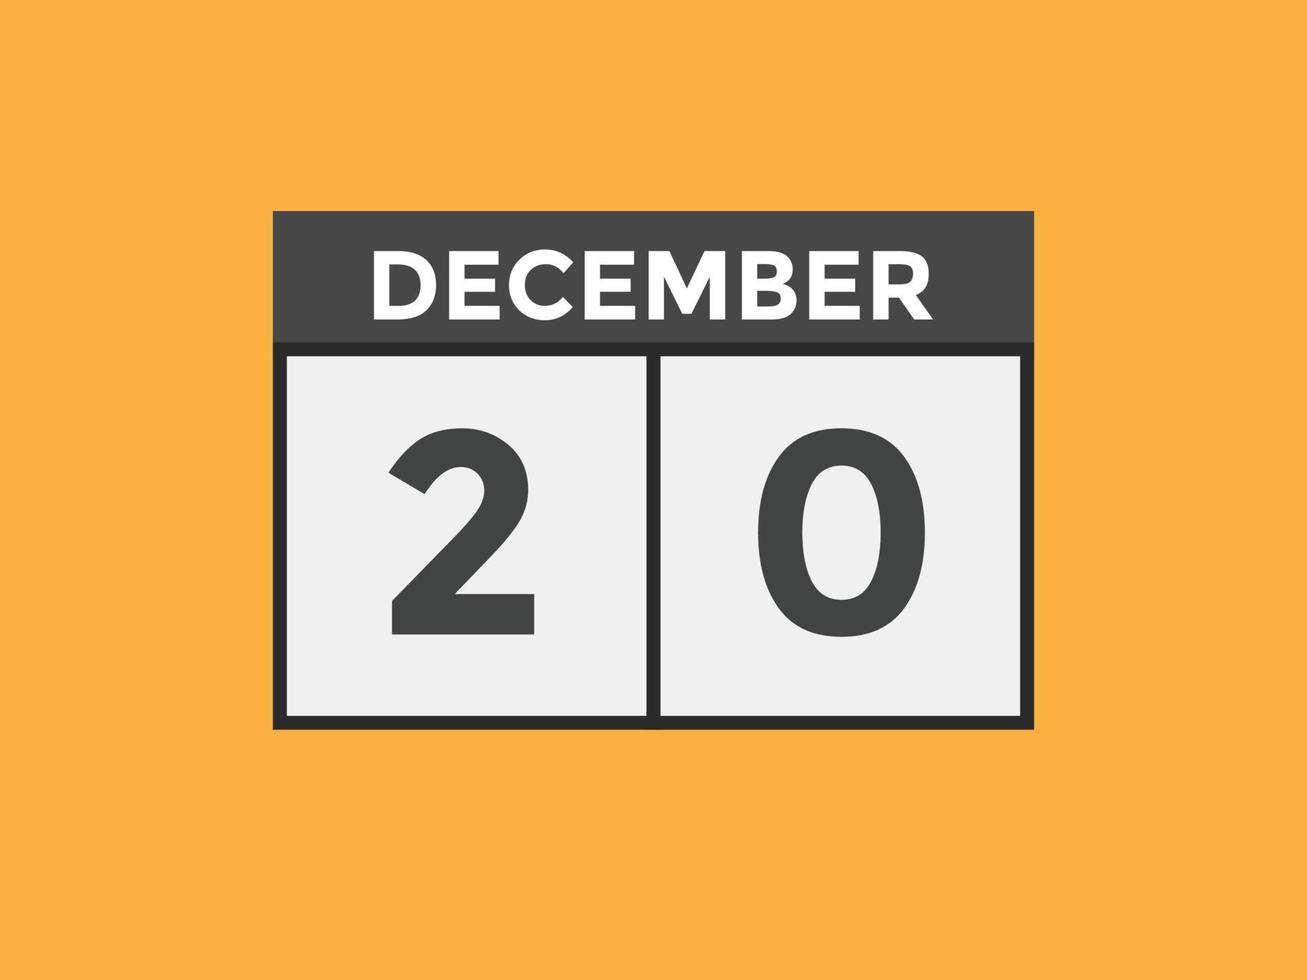 20. dezember kalendererinnerung. 20. dezember tägliche kalendersymbolvorlage. Kalender 20. Dezember Icon-Design-Vorlage. Vektor-Illustration vektor